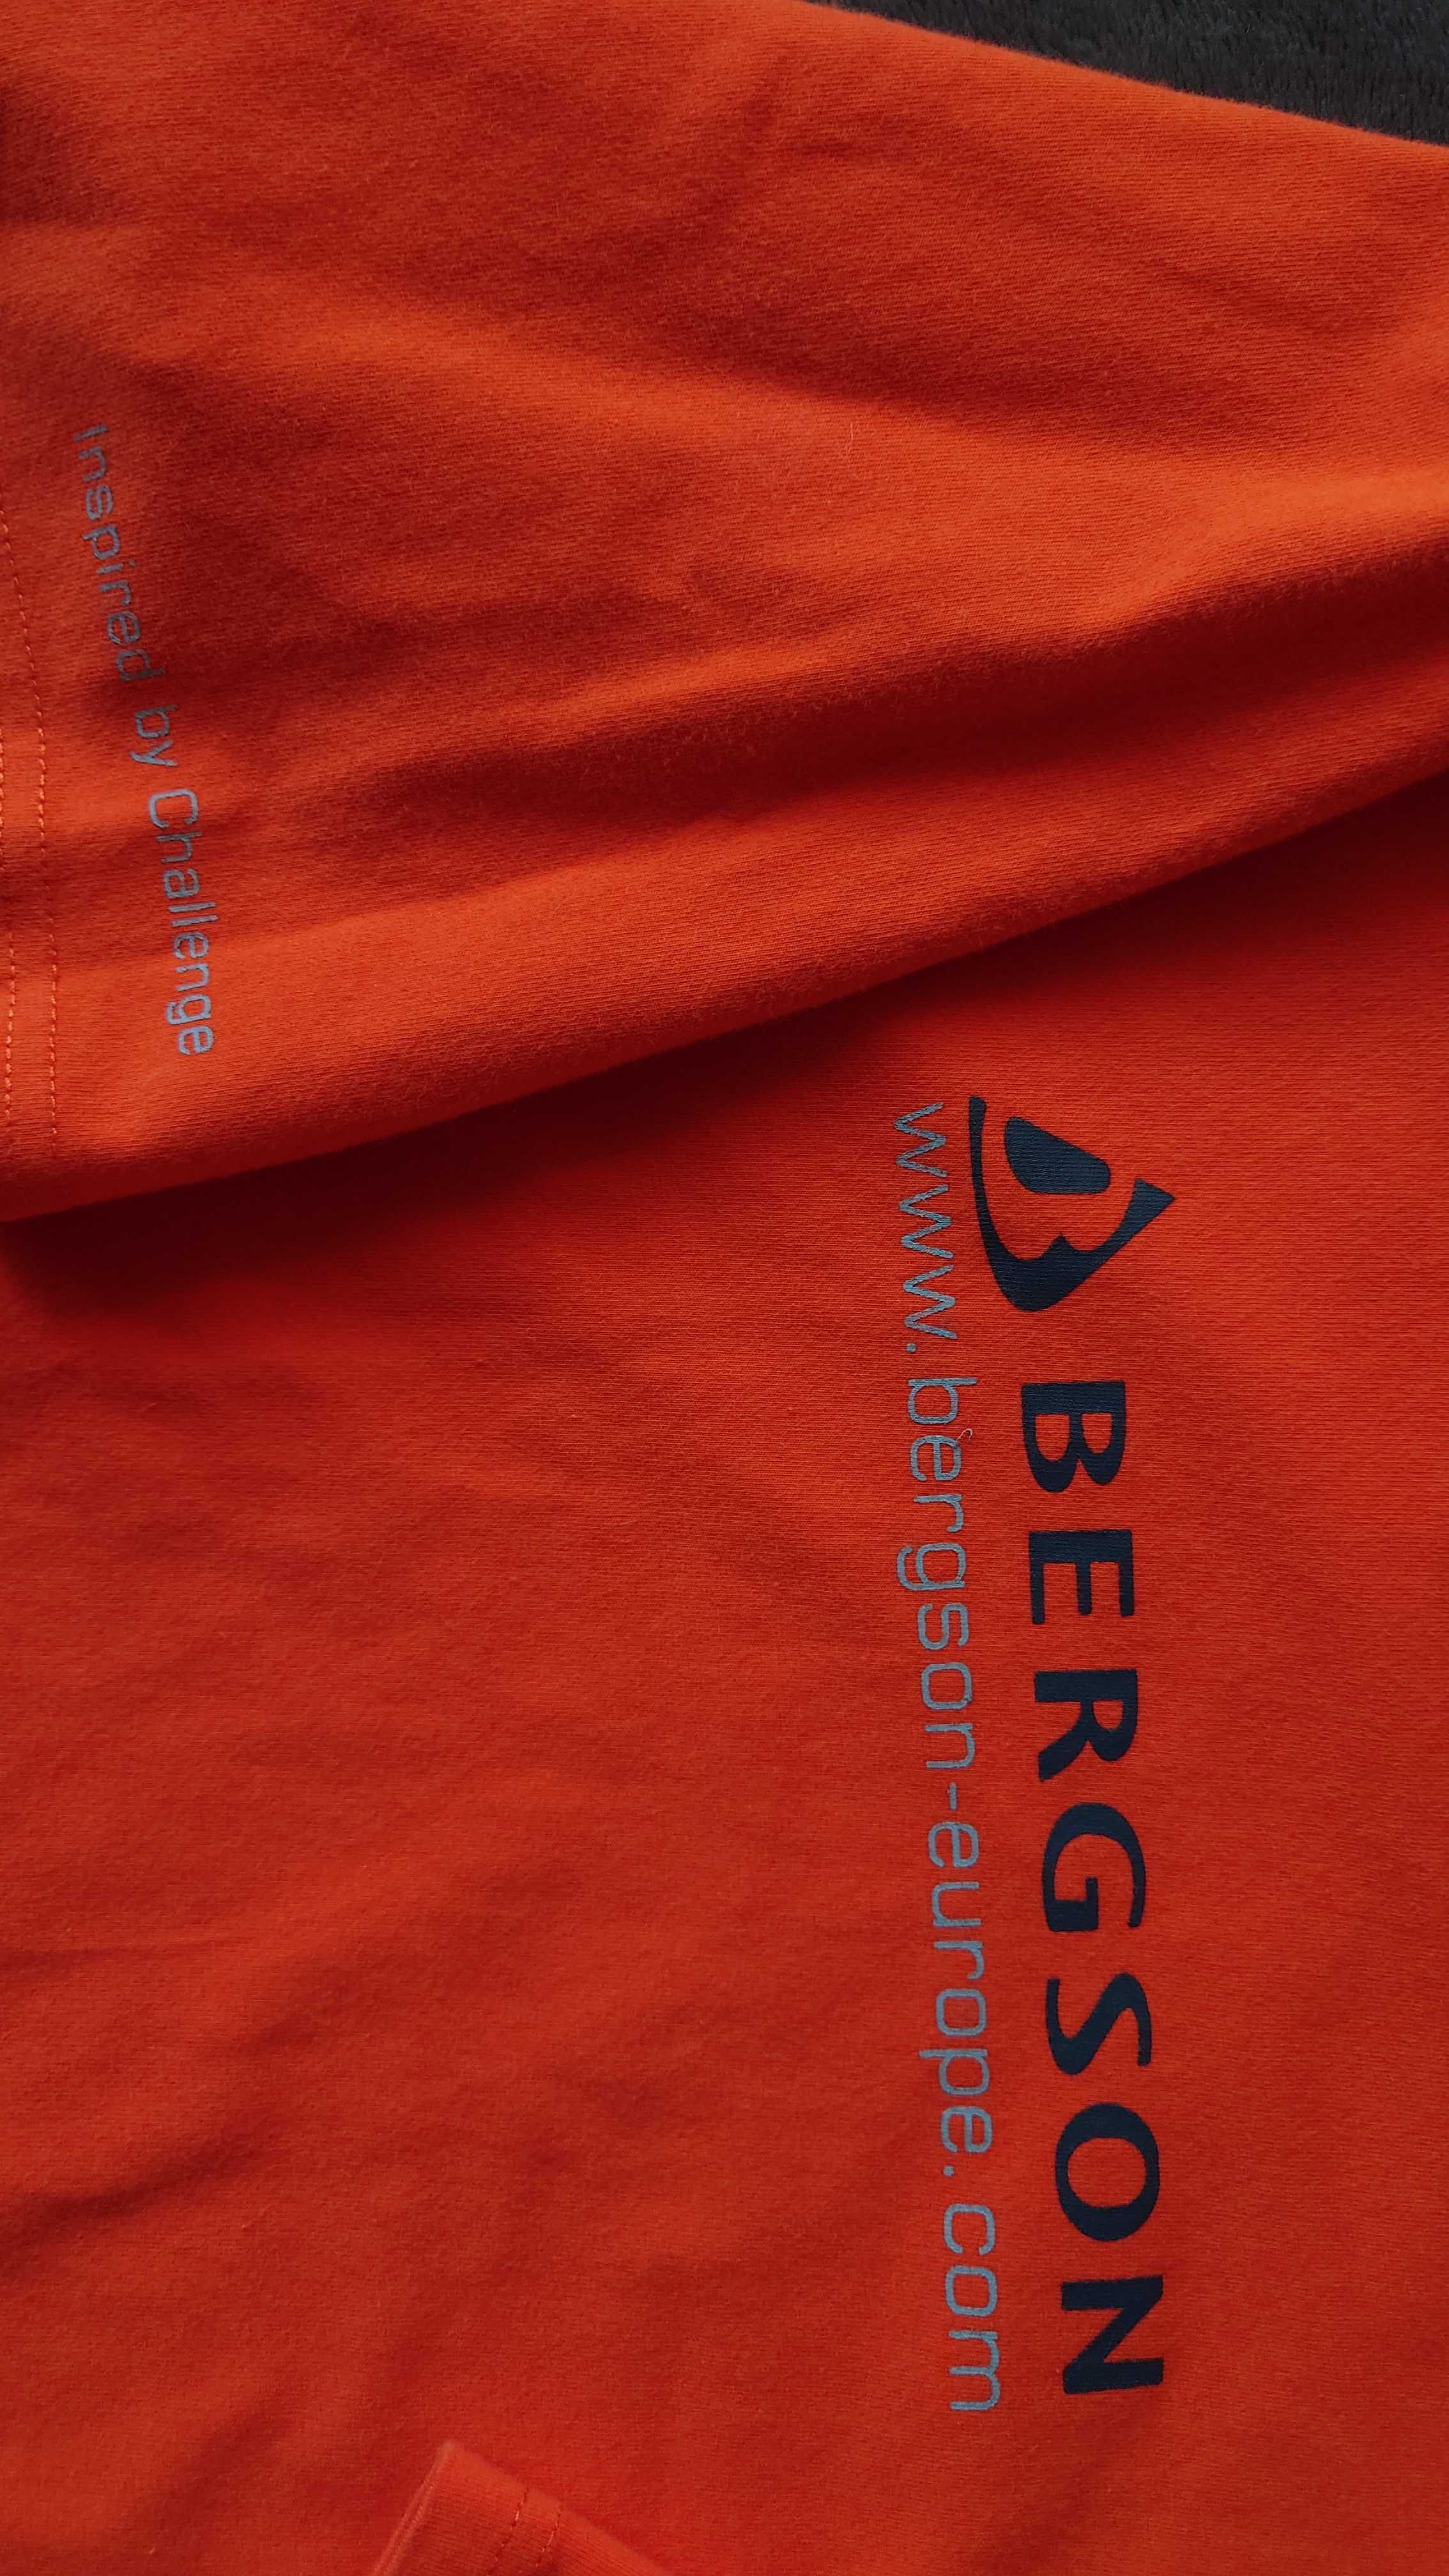 koszulka, t-shirt Bergson, L